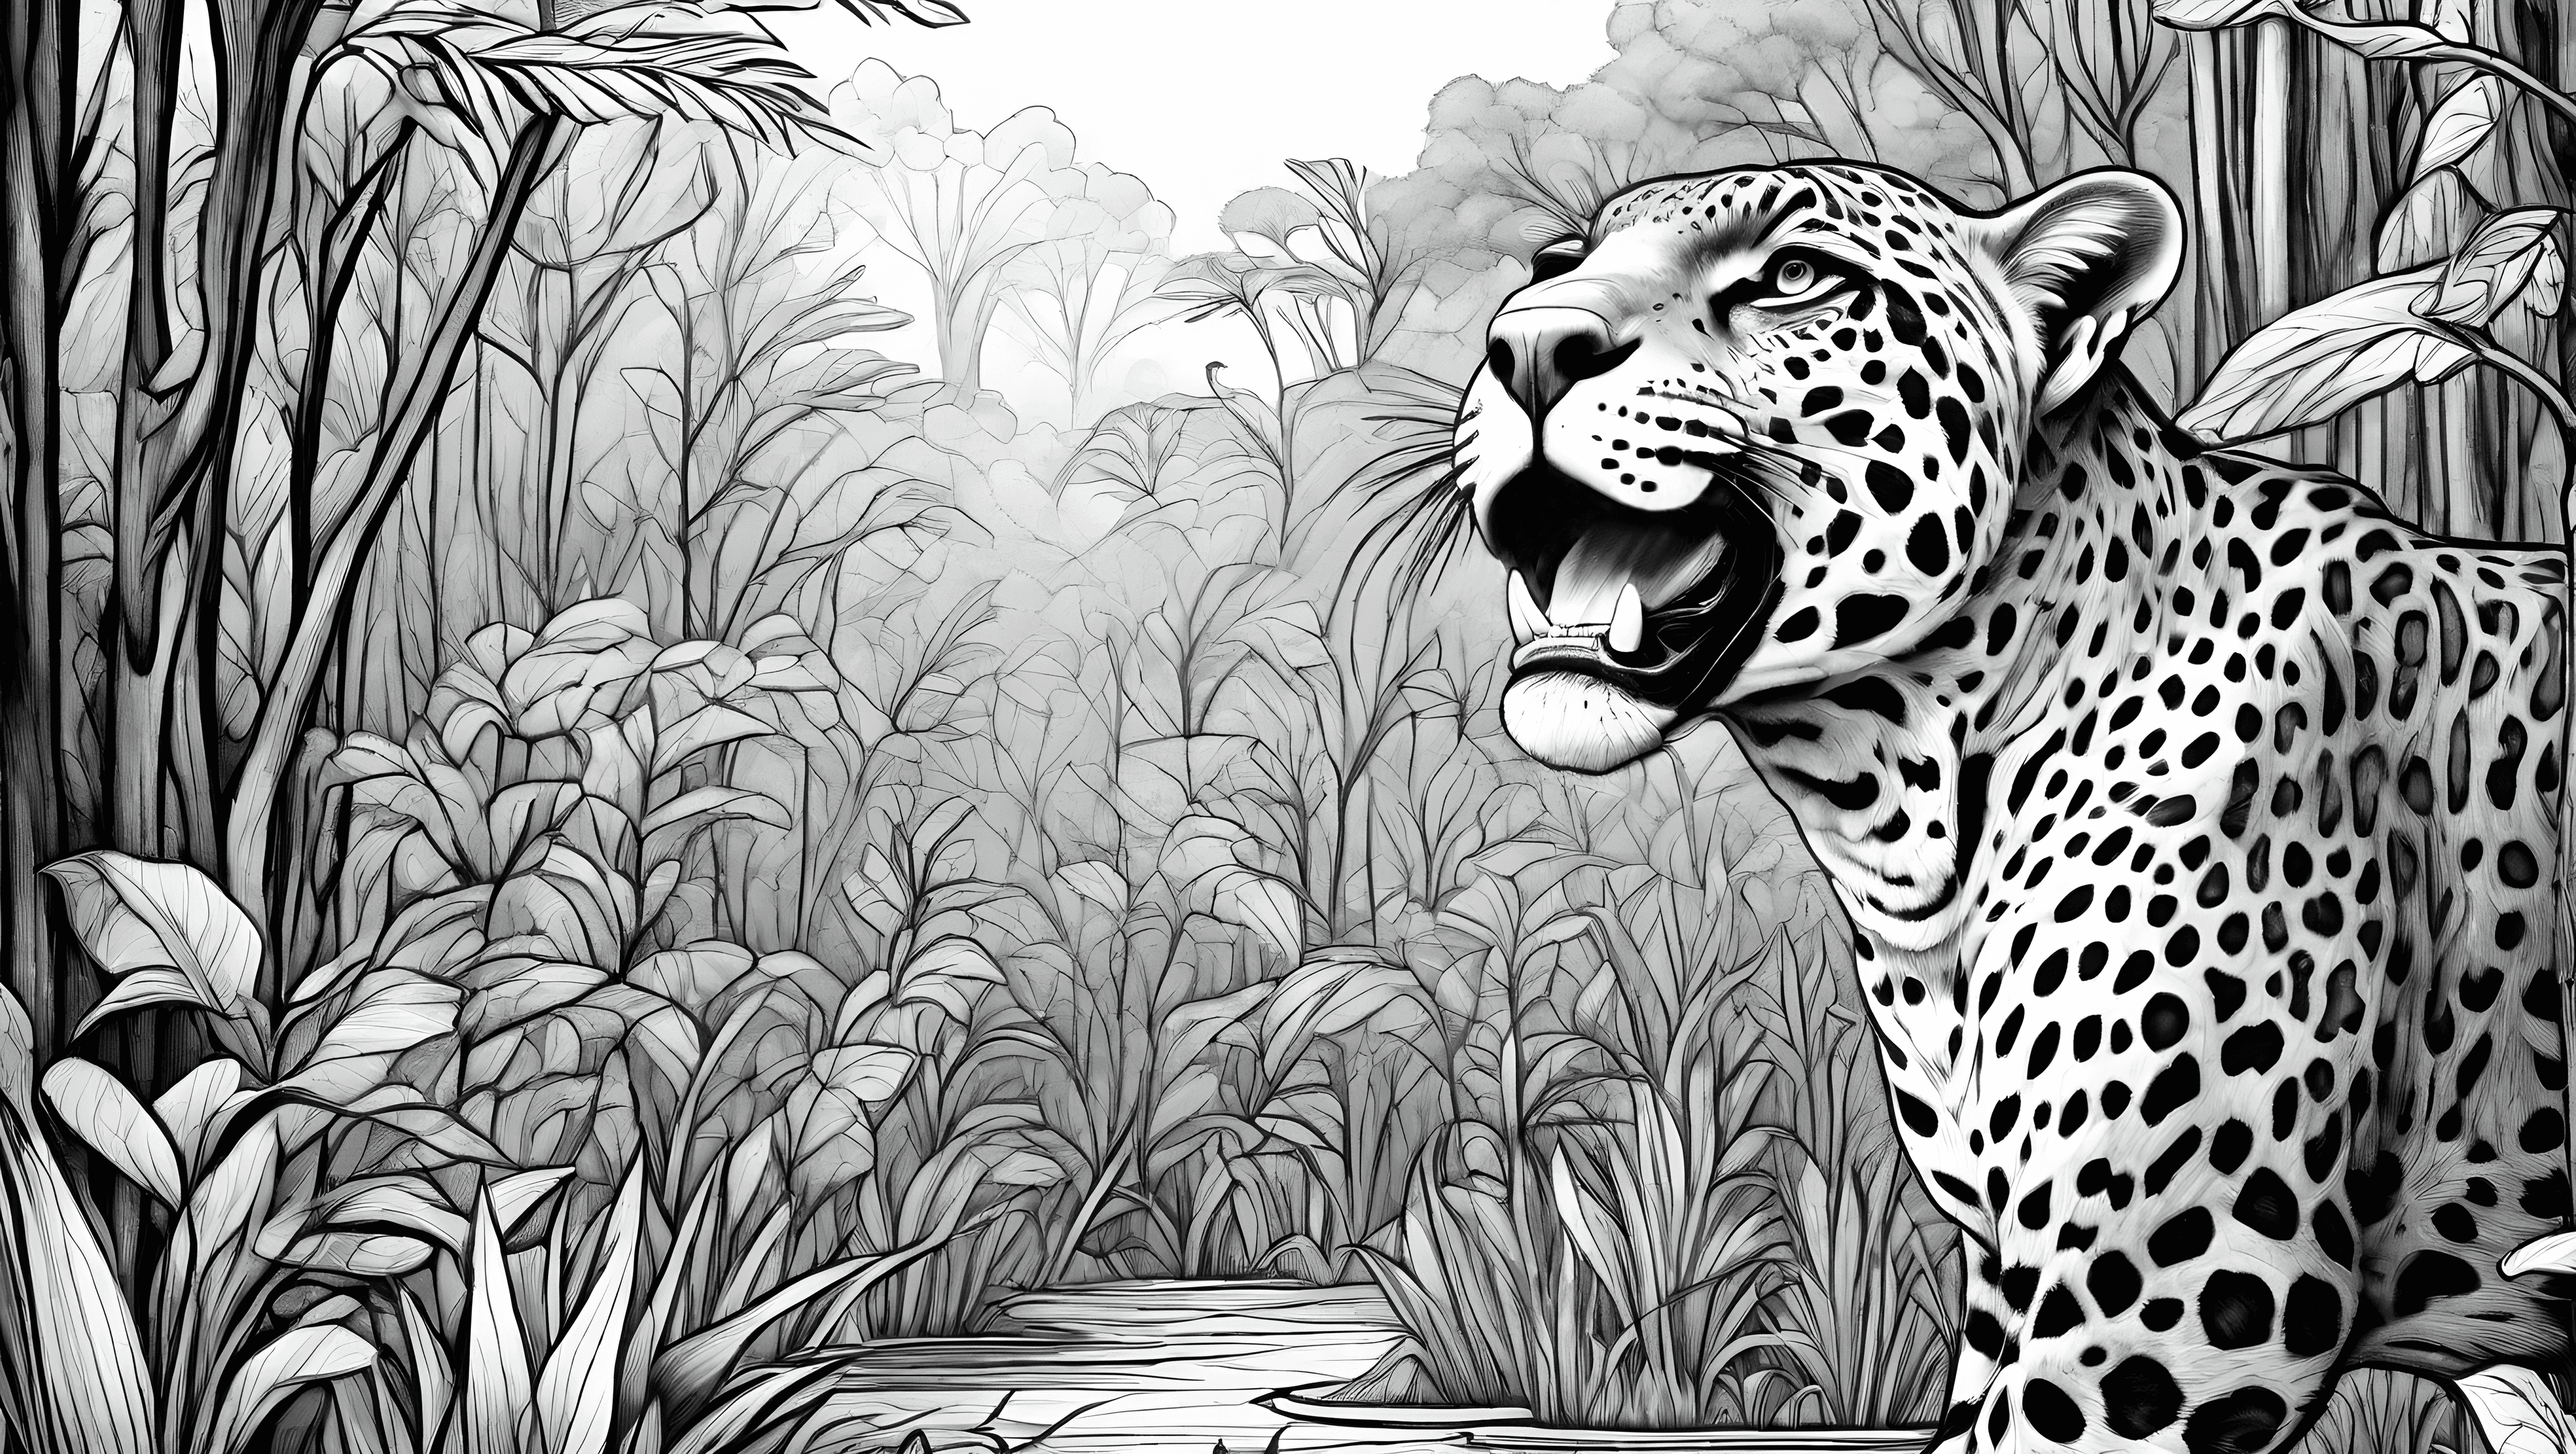 Picture of the jaguar